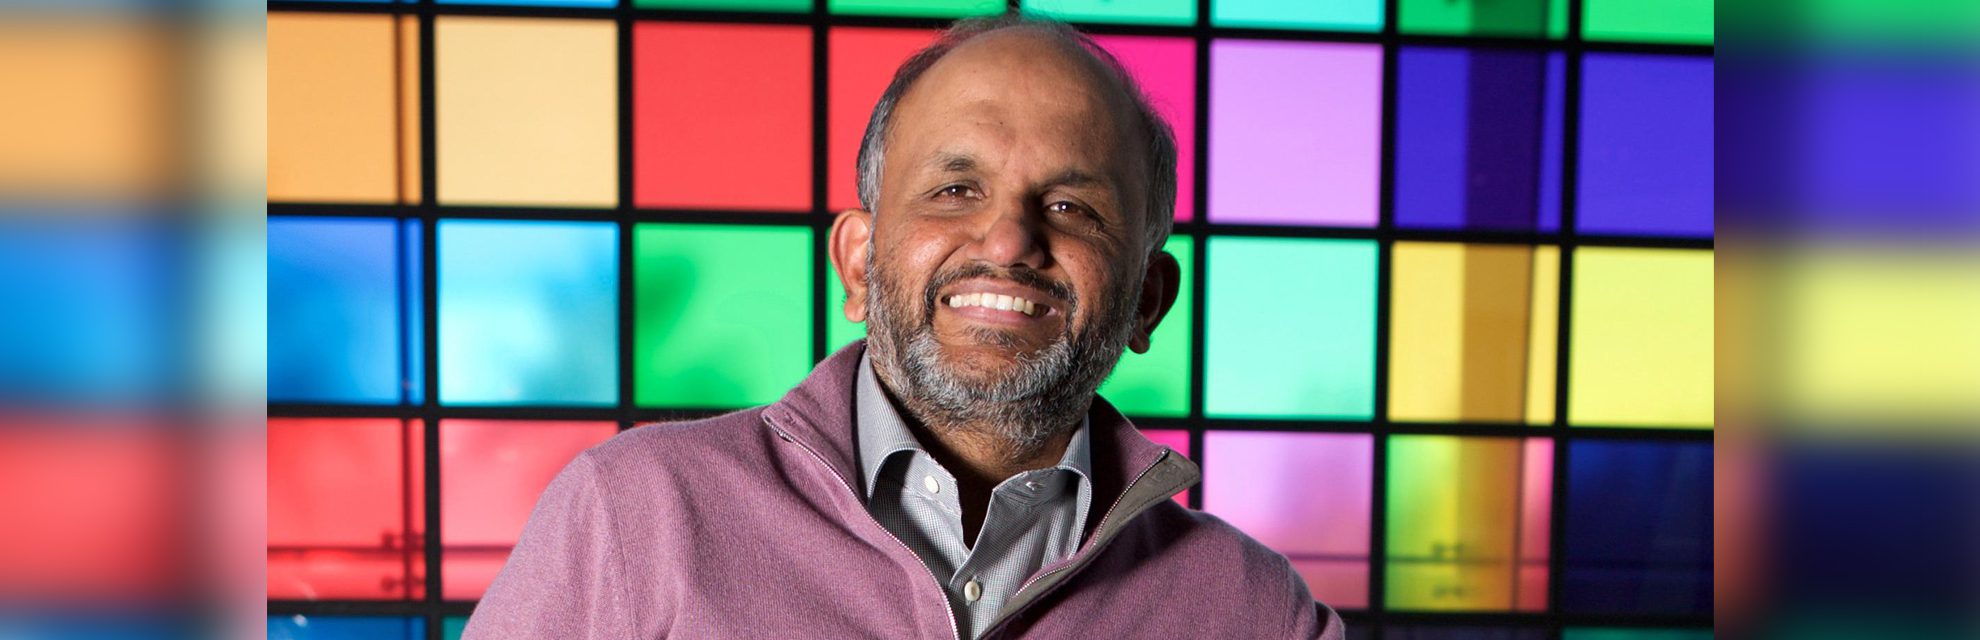 Shantanu Narayen: CEO หัวใจและจิตวิญญาณของ Adobe